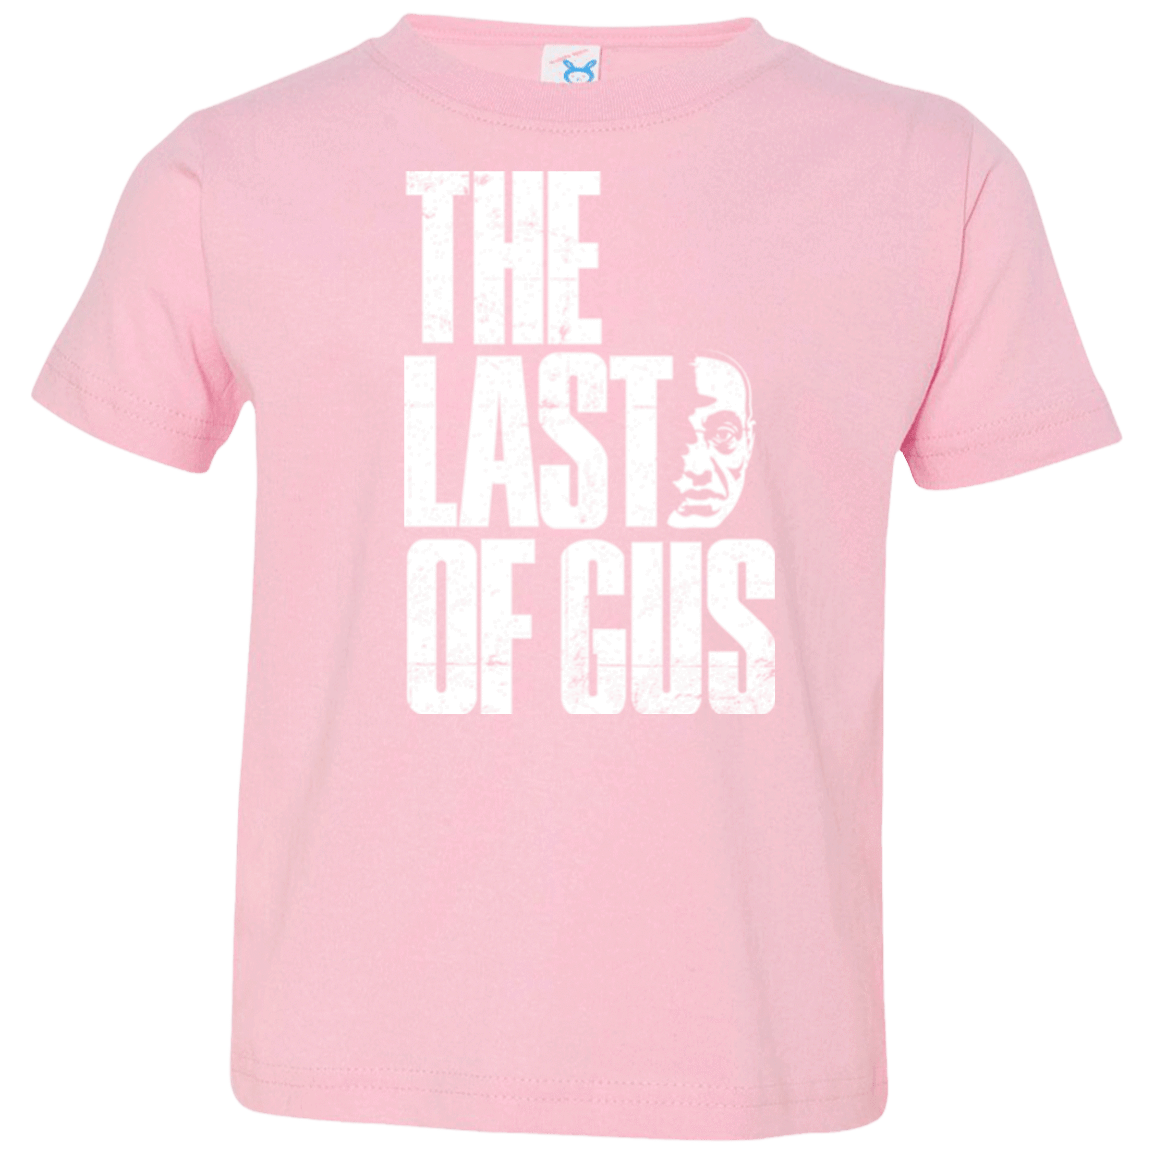 T-Shirts Pink / 2T Last of Gus Toddler Premium T-Shirt